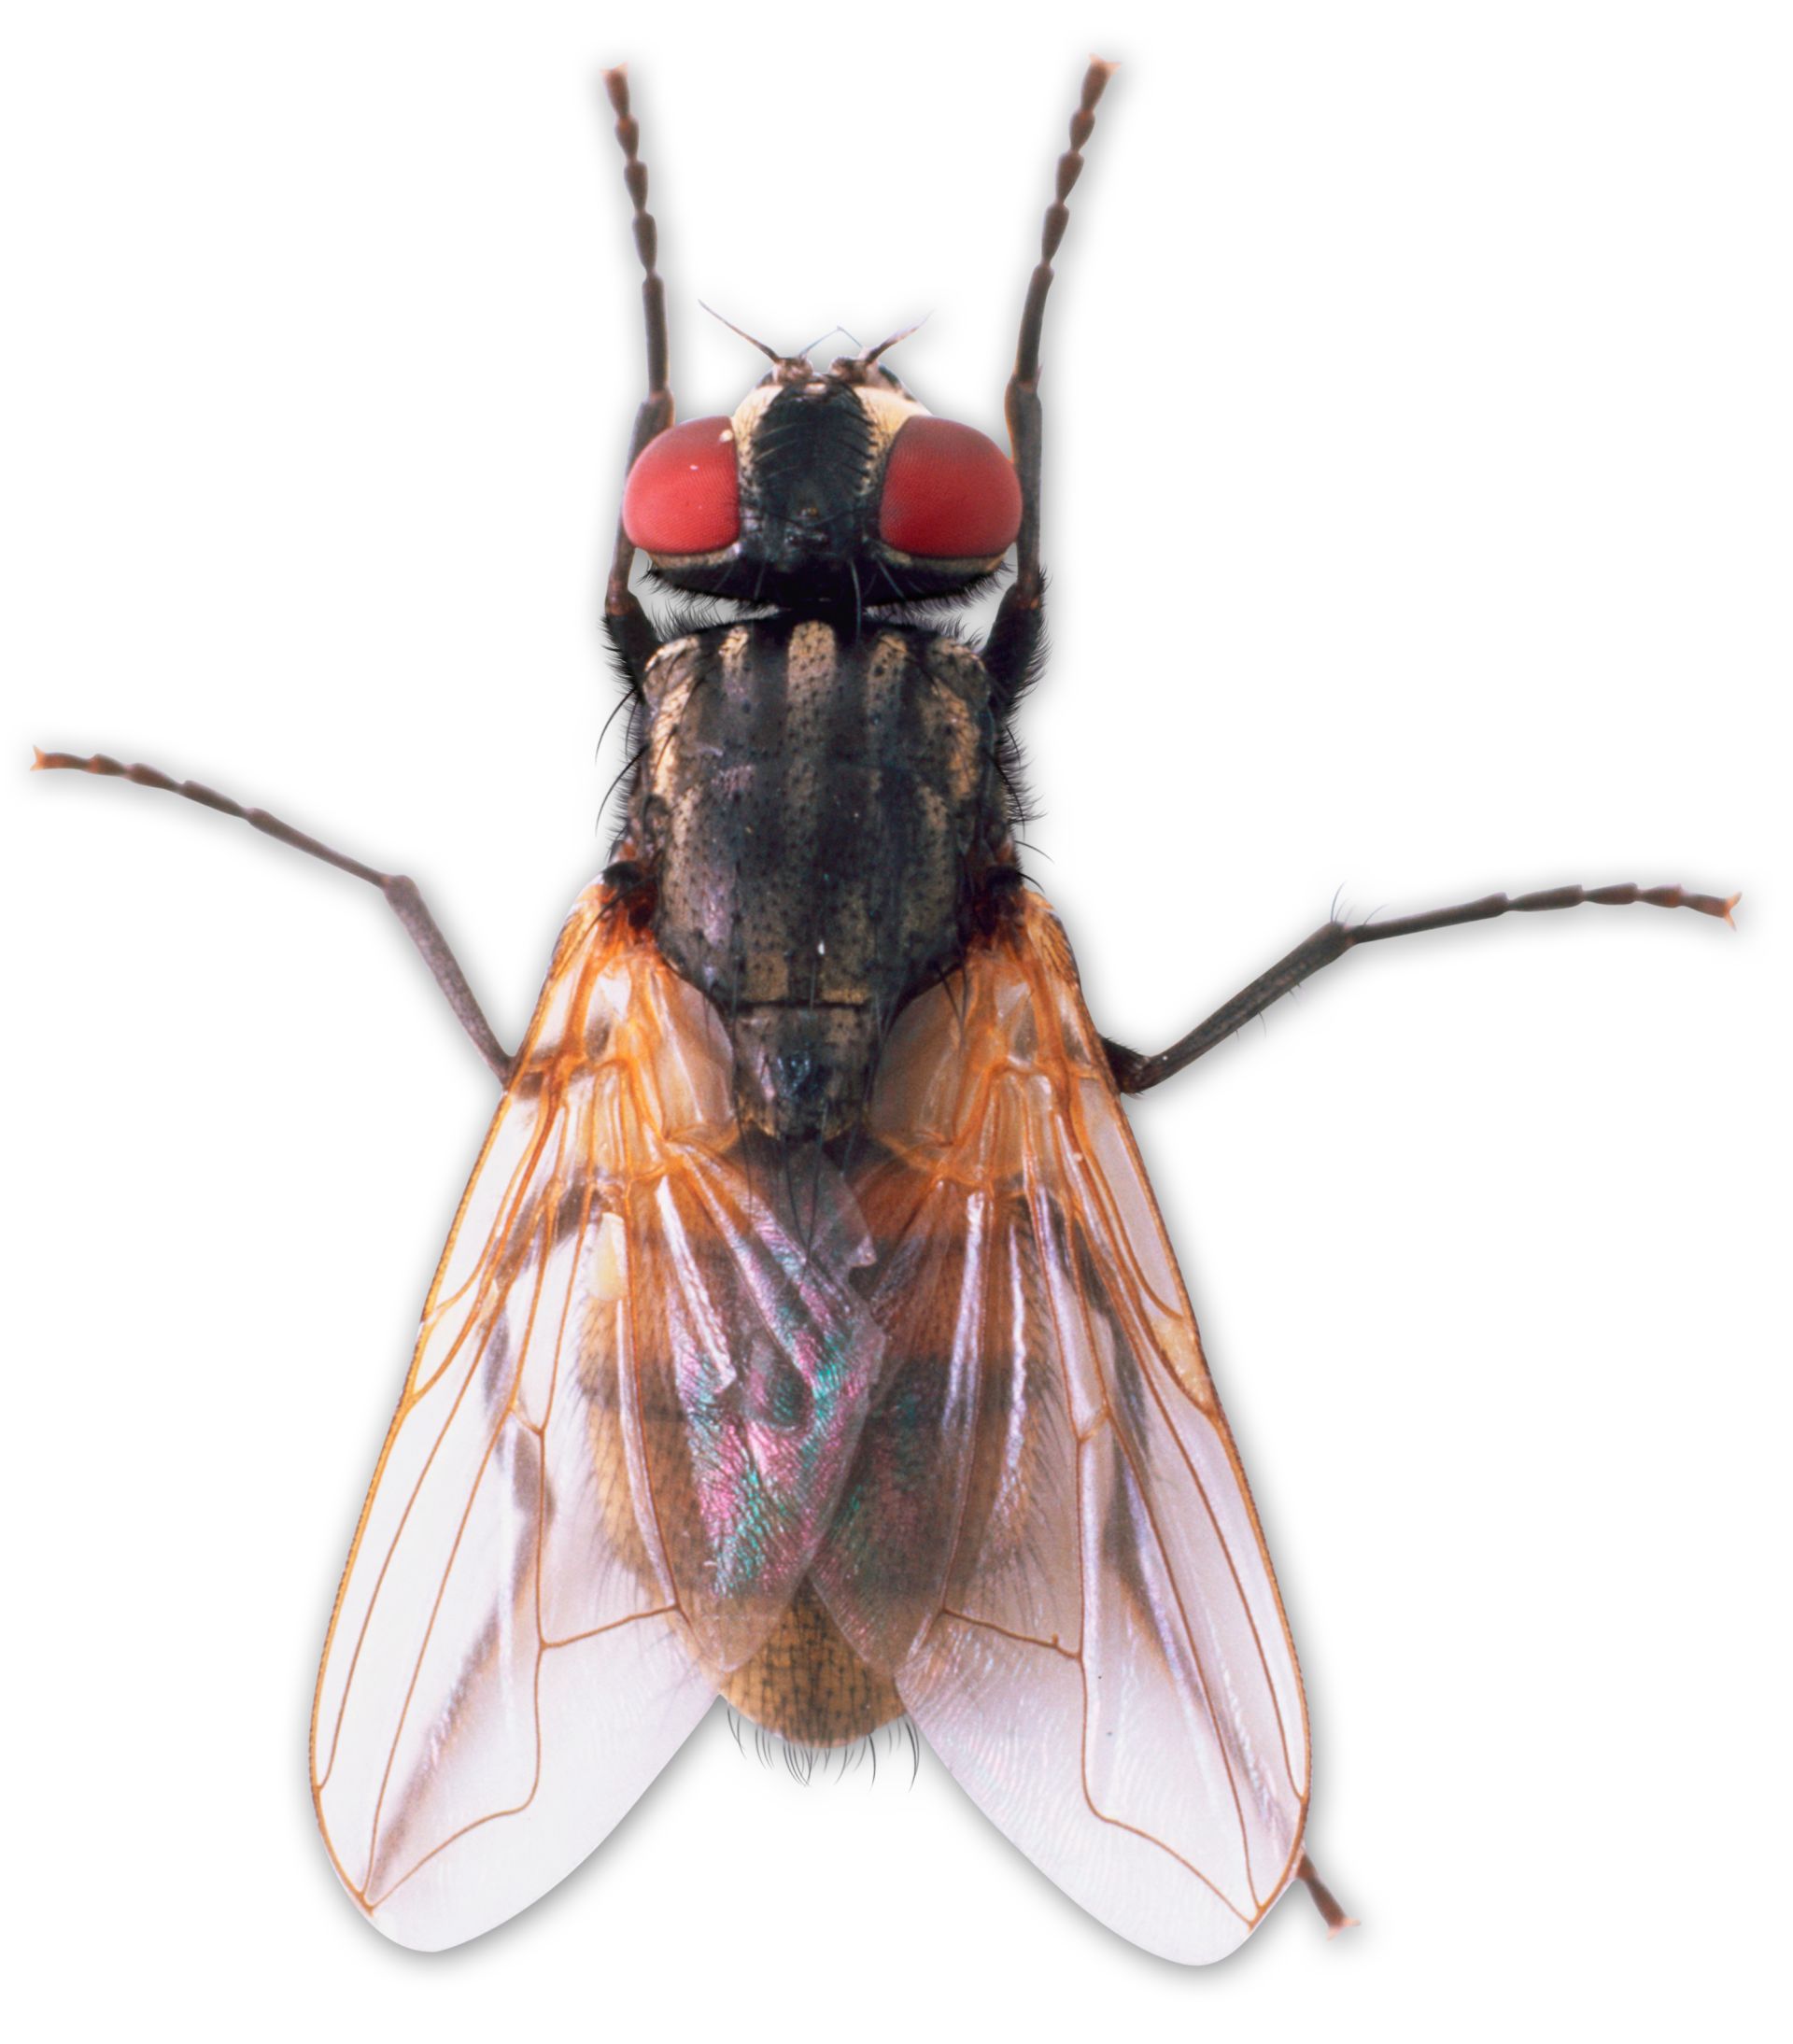 True Flies | Facts About Flies | DK Find Out